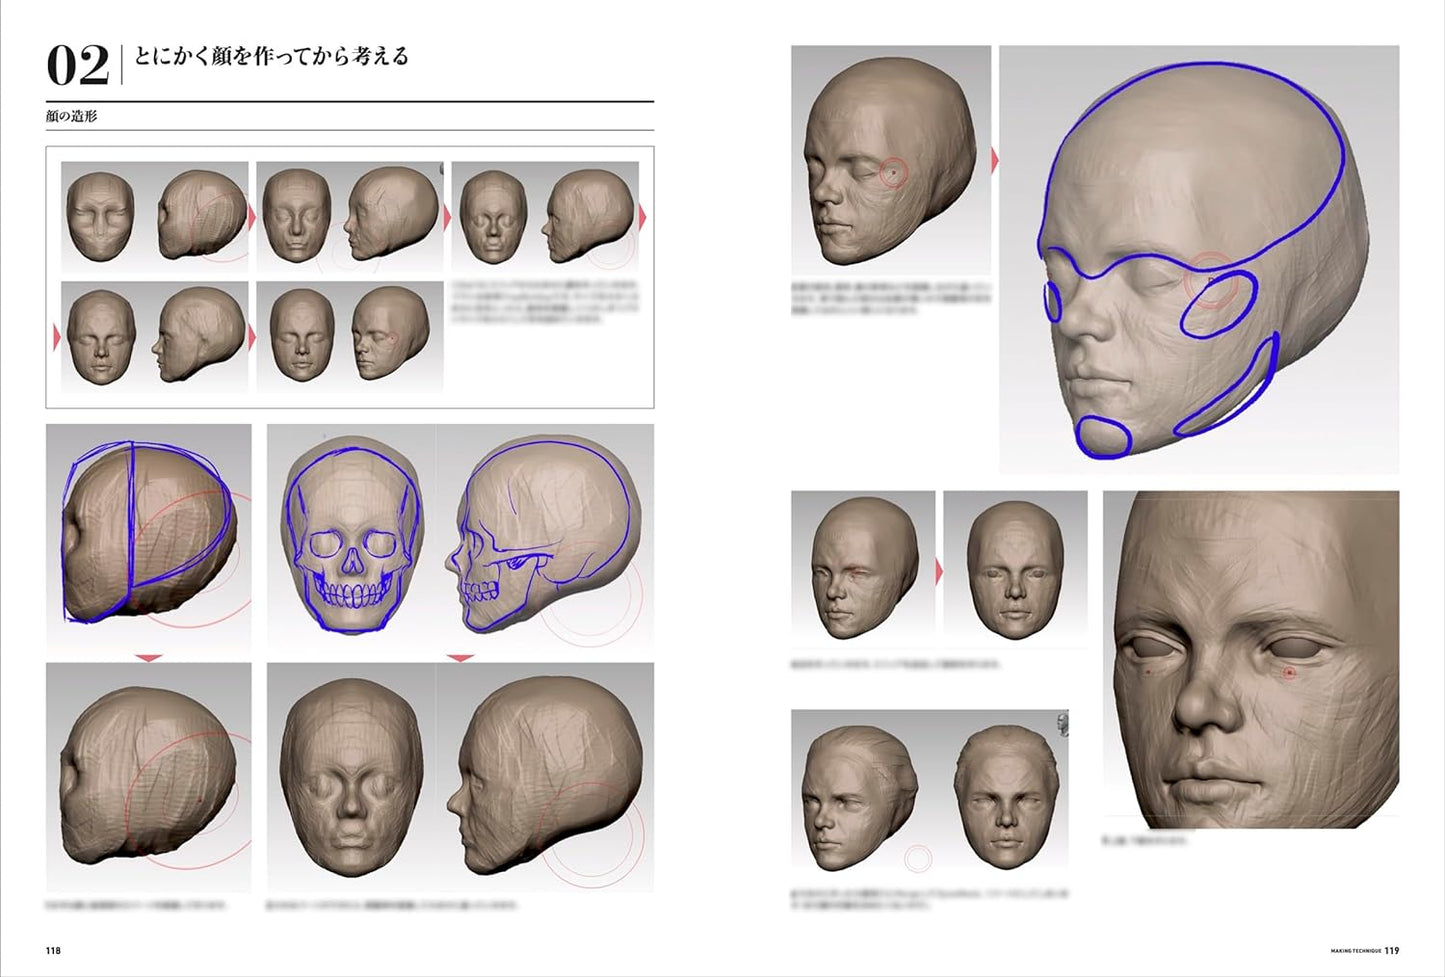 Masato Ohata Artworks/Modeling Techniques "STRING"